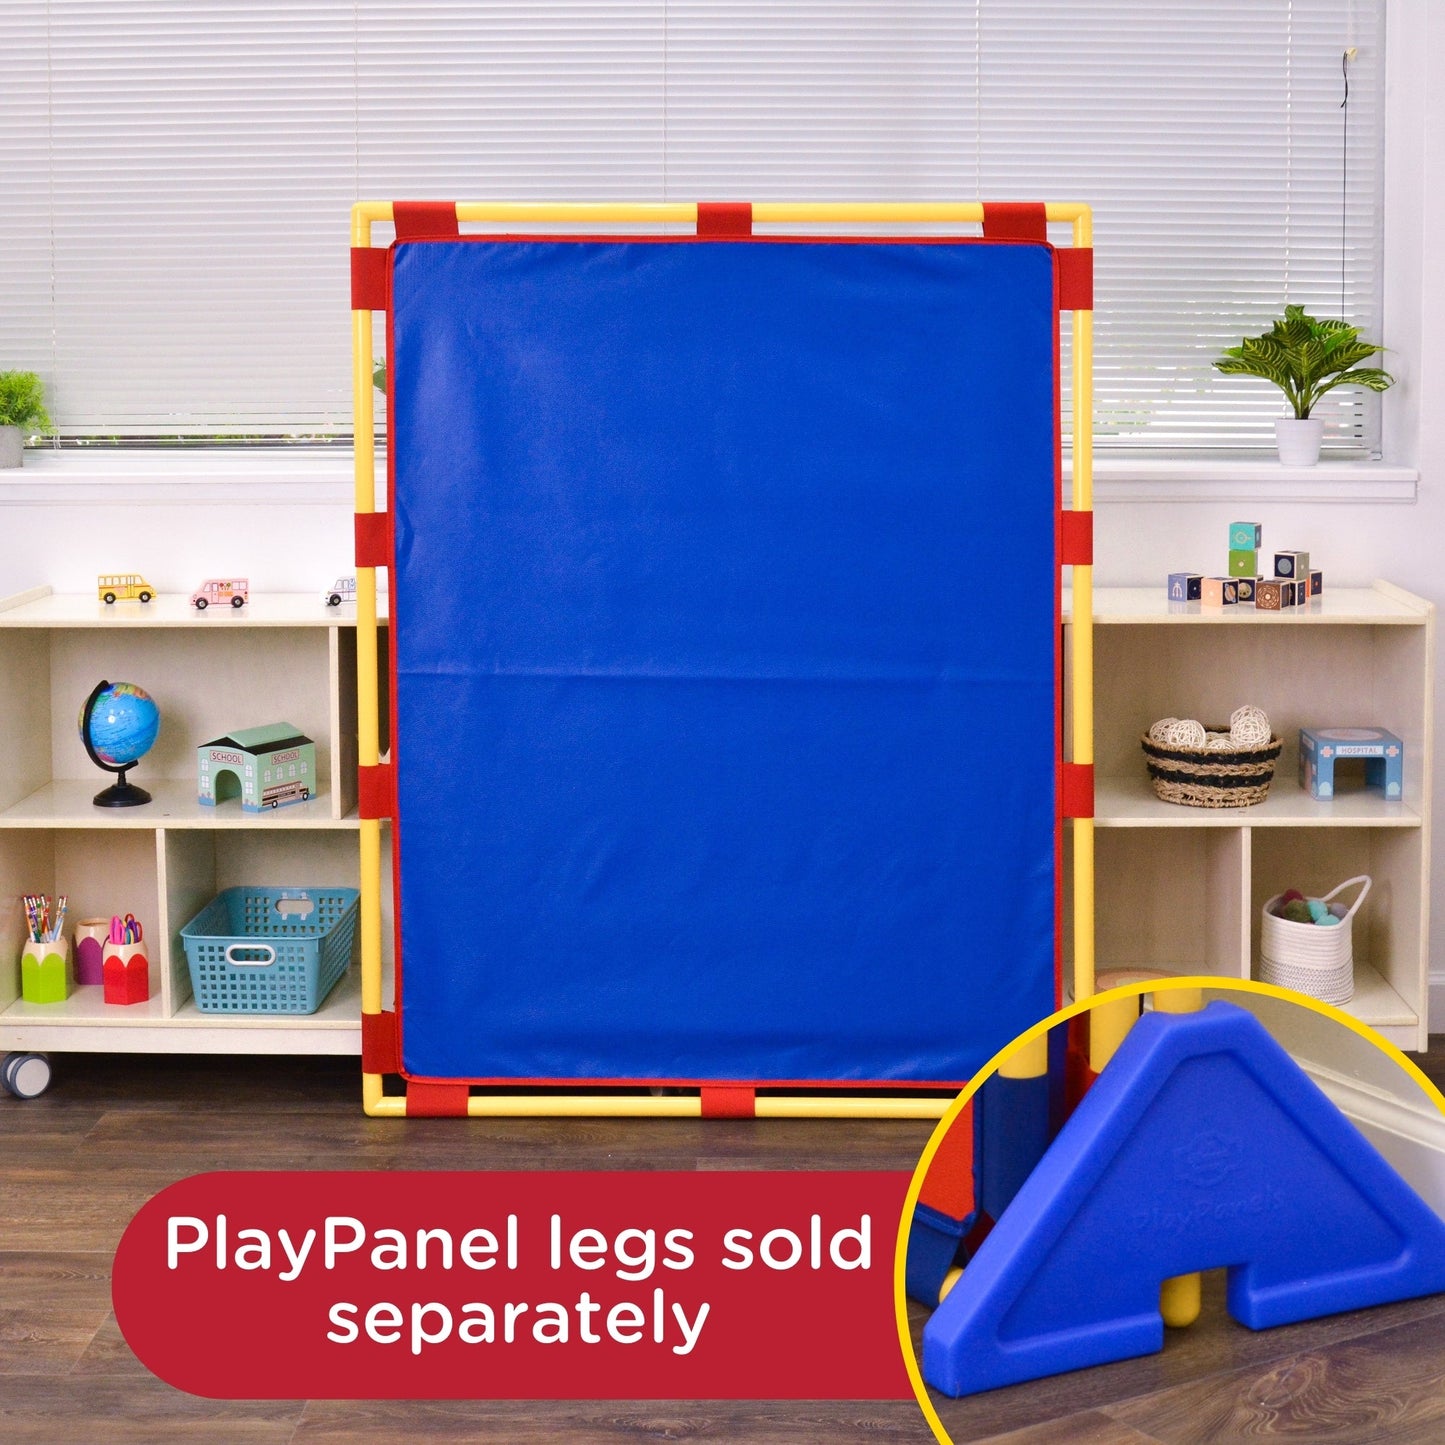 Children's Factory Big Screen PlayPanel (CF900-517) - SchoolOutlet